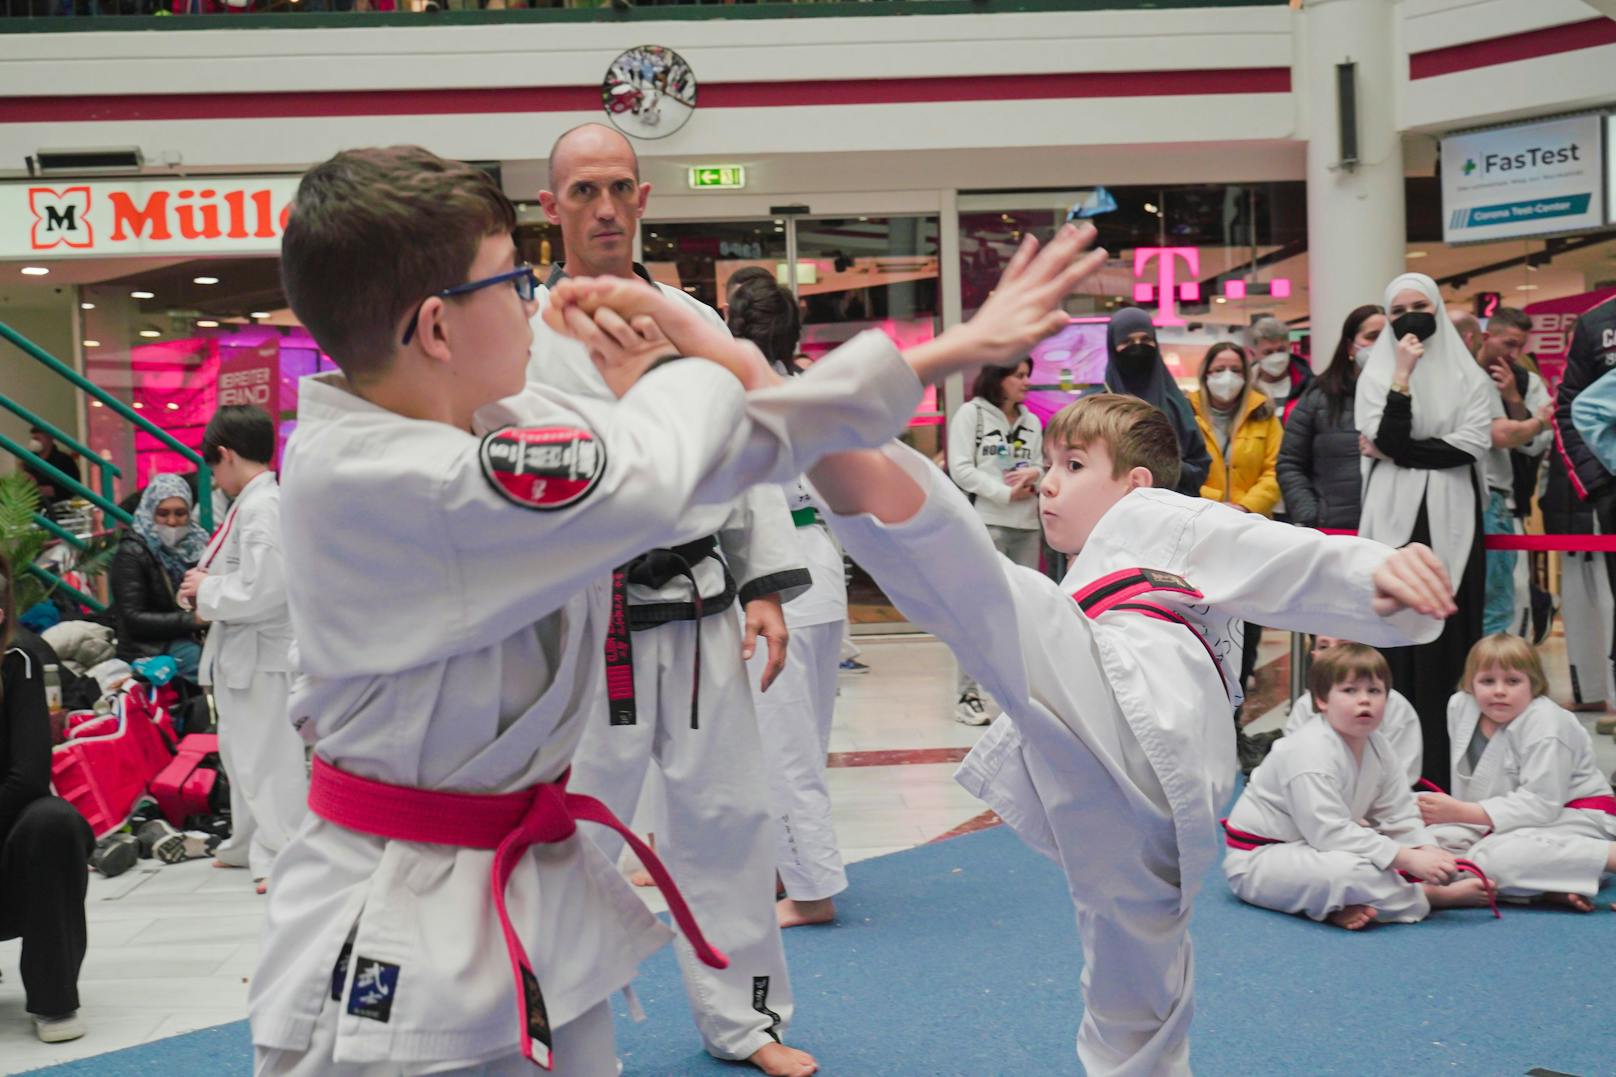 Taekwondo-Turnier brachte Lugner City zum Beben